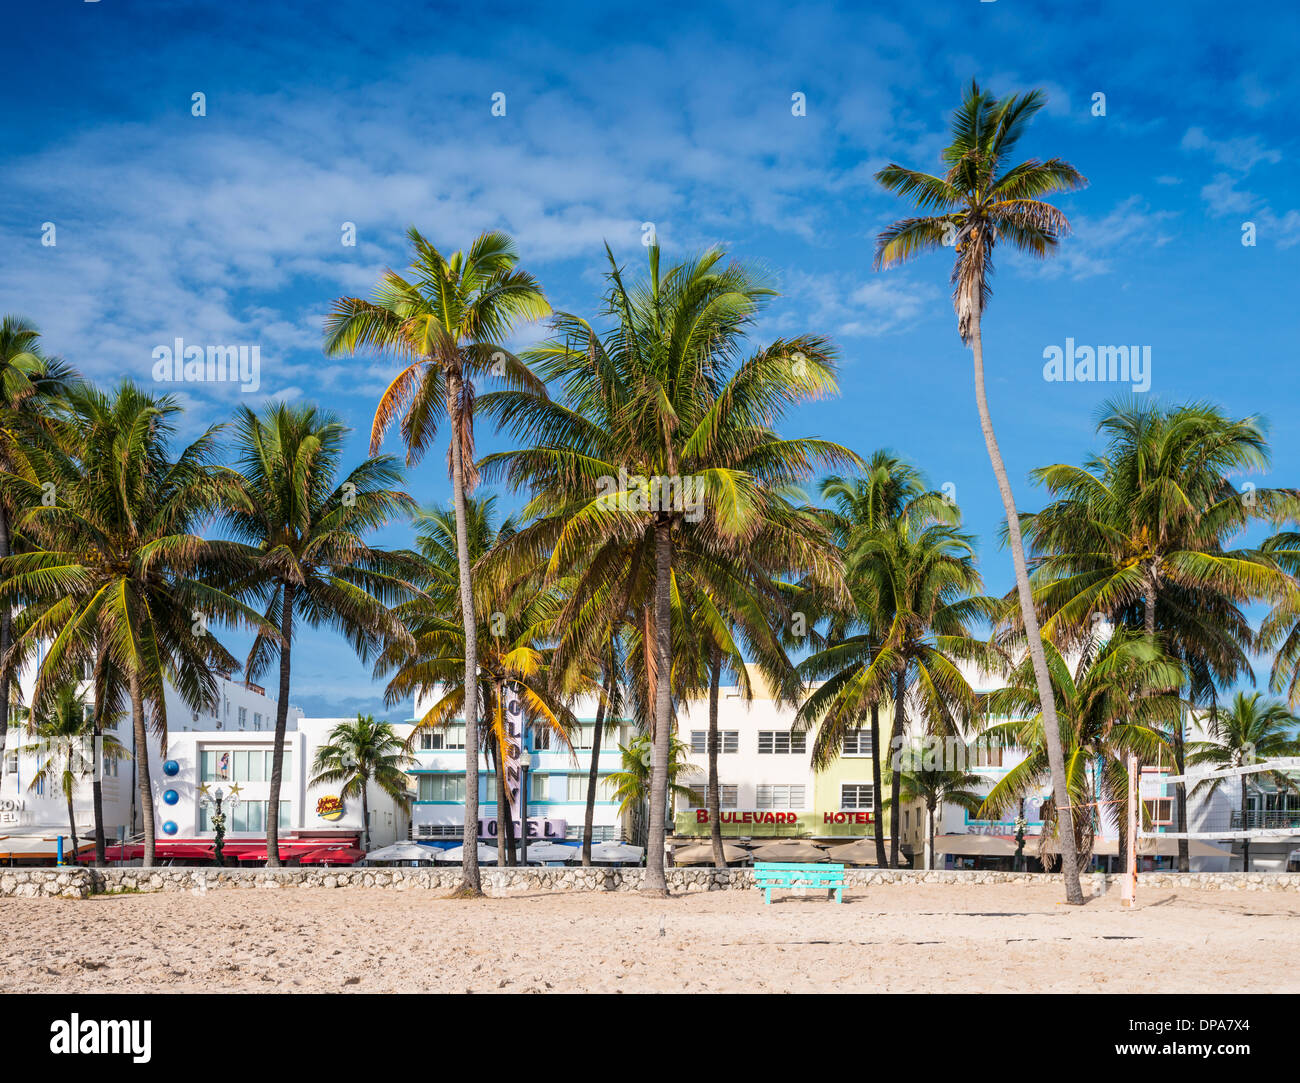 MIAMI, FLORIDA - JANUARY 6, 2014: Palm trees line Ocean Drive. The road is the main thoroughfare through South Beach. Stock Photo